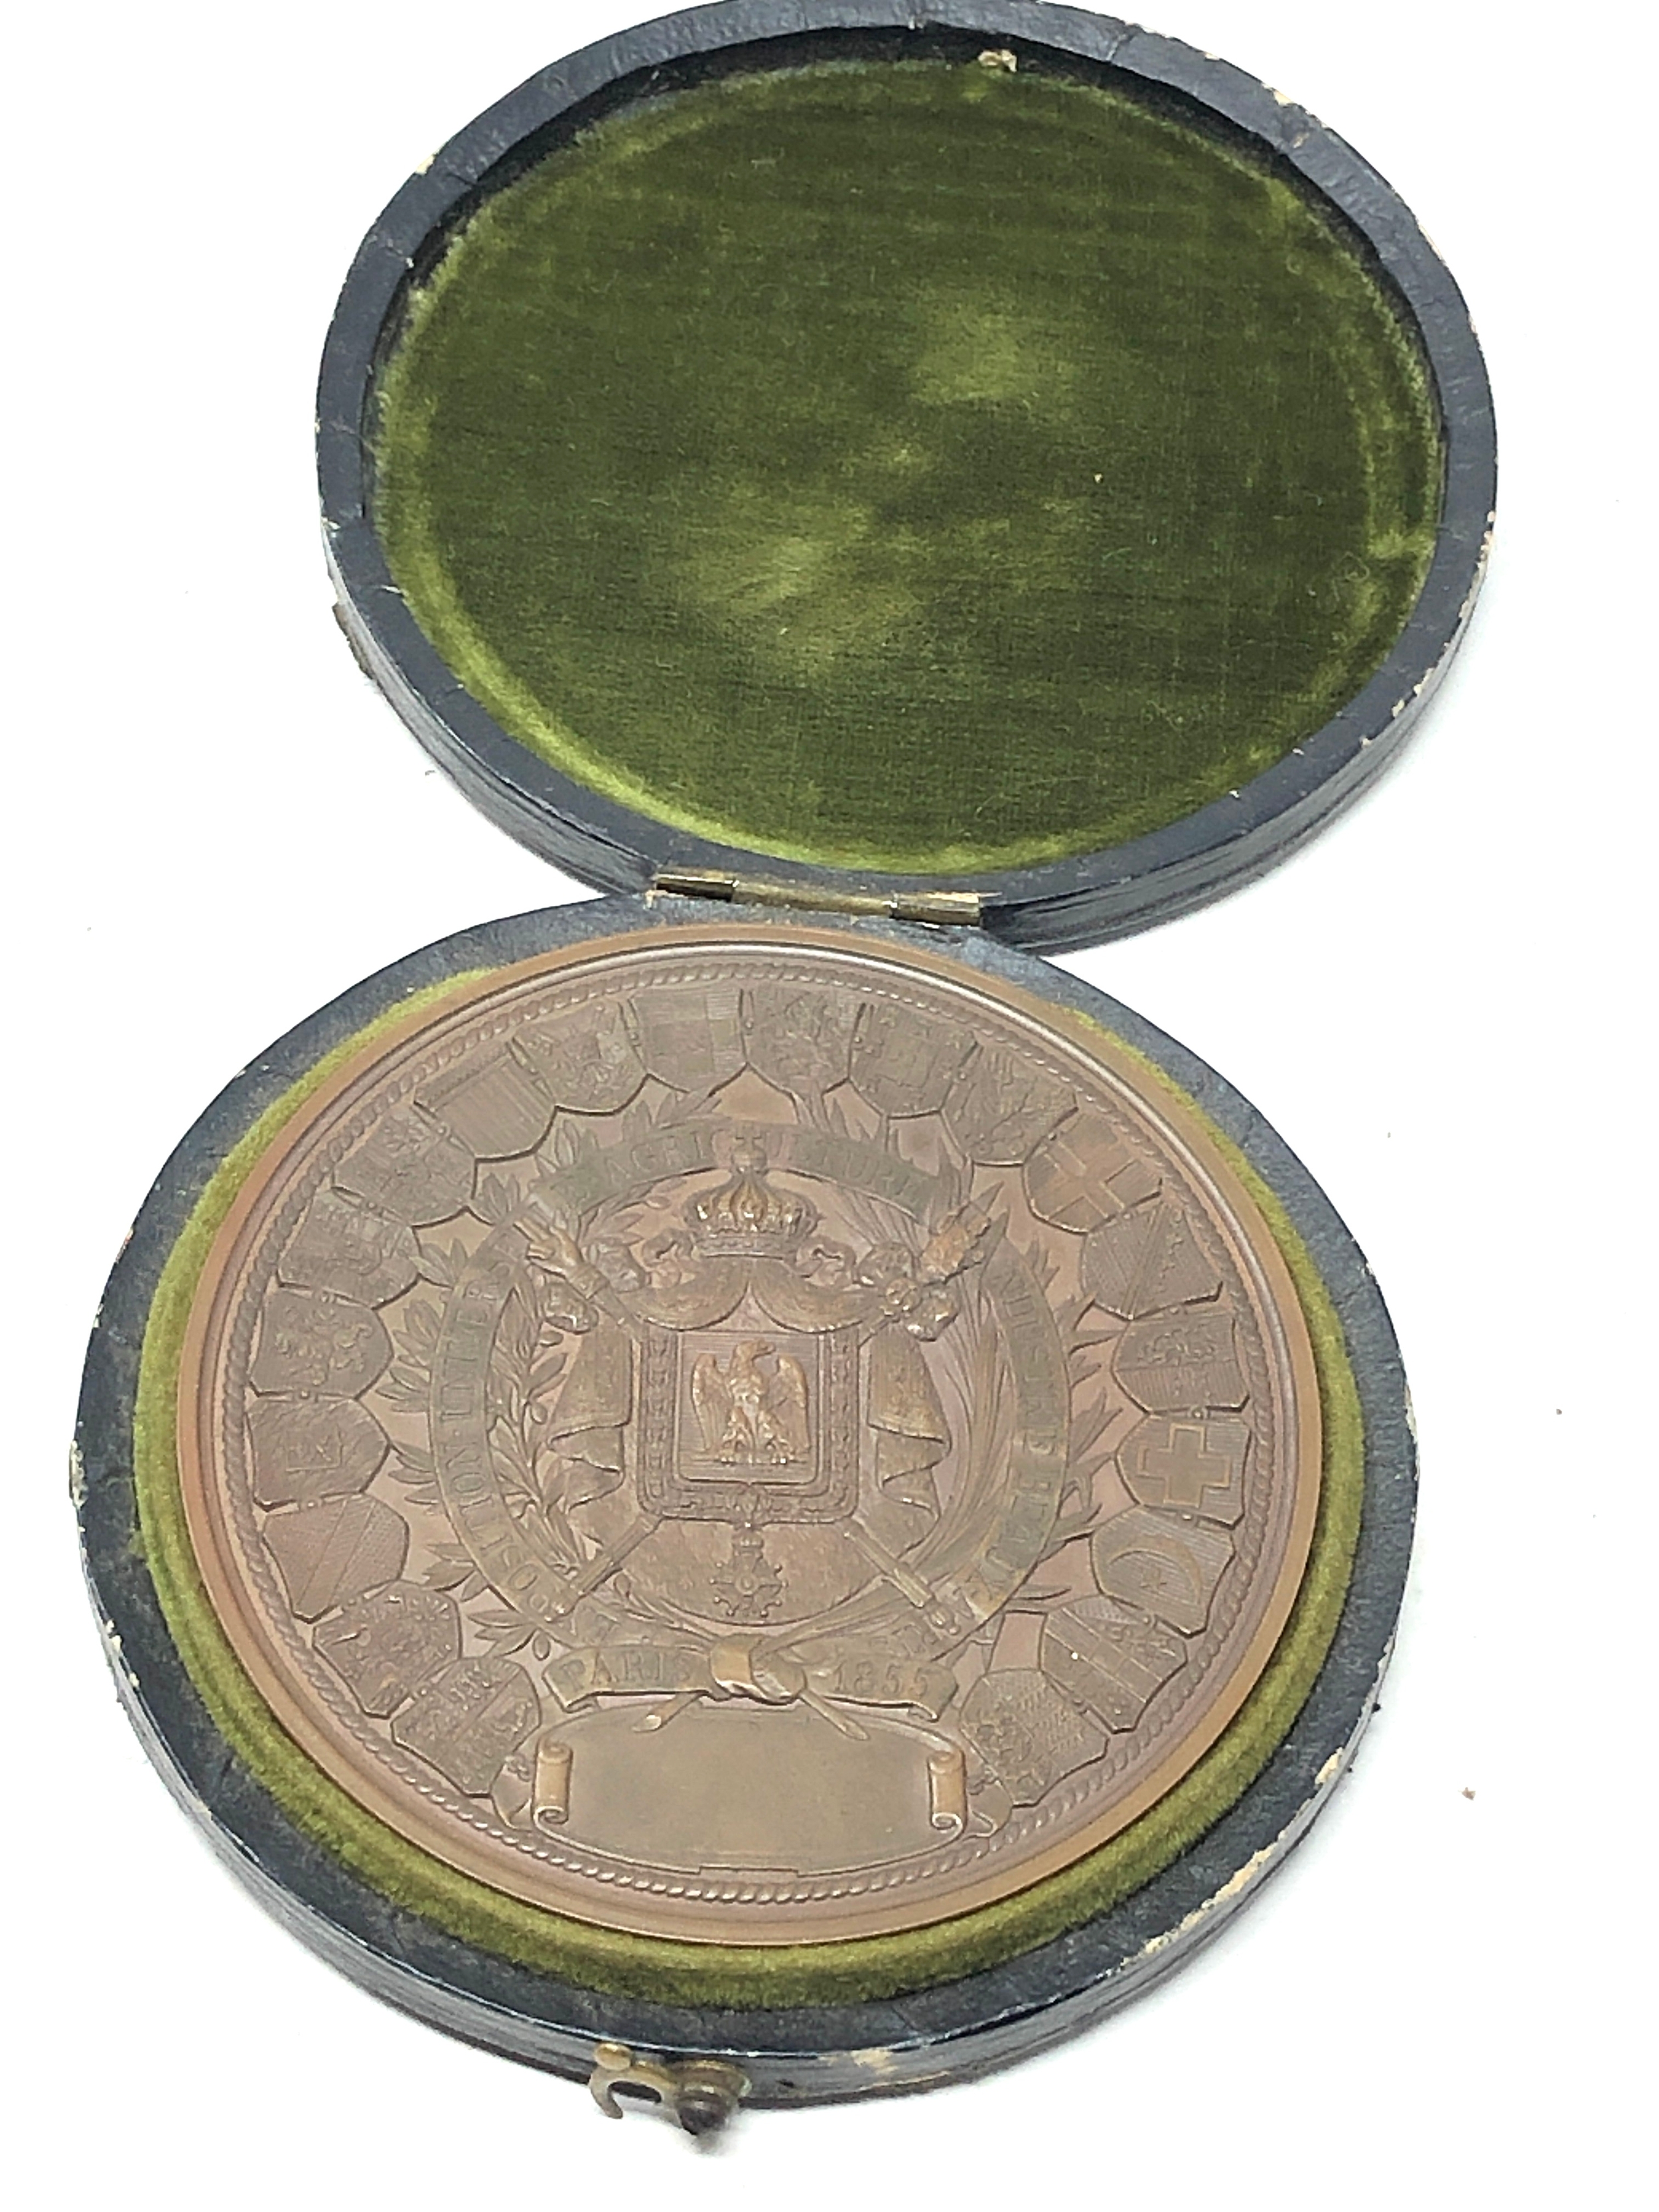 1855 bronze napoleon 111 exposition medal original box - Image 3 of 3